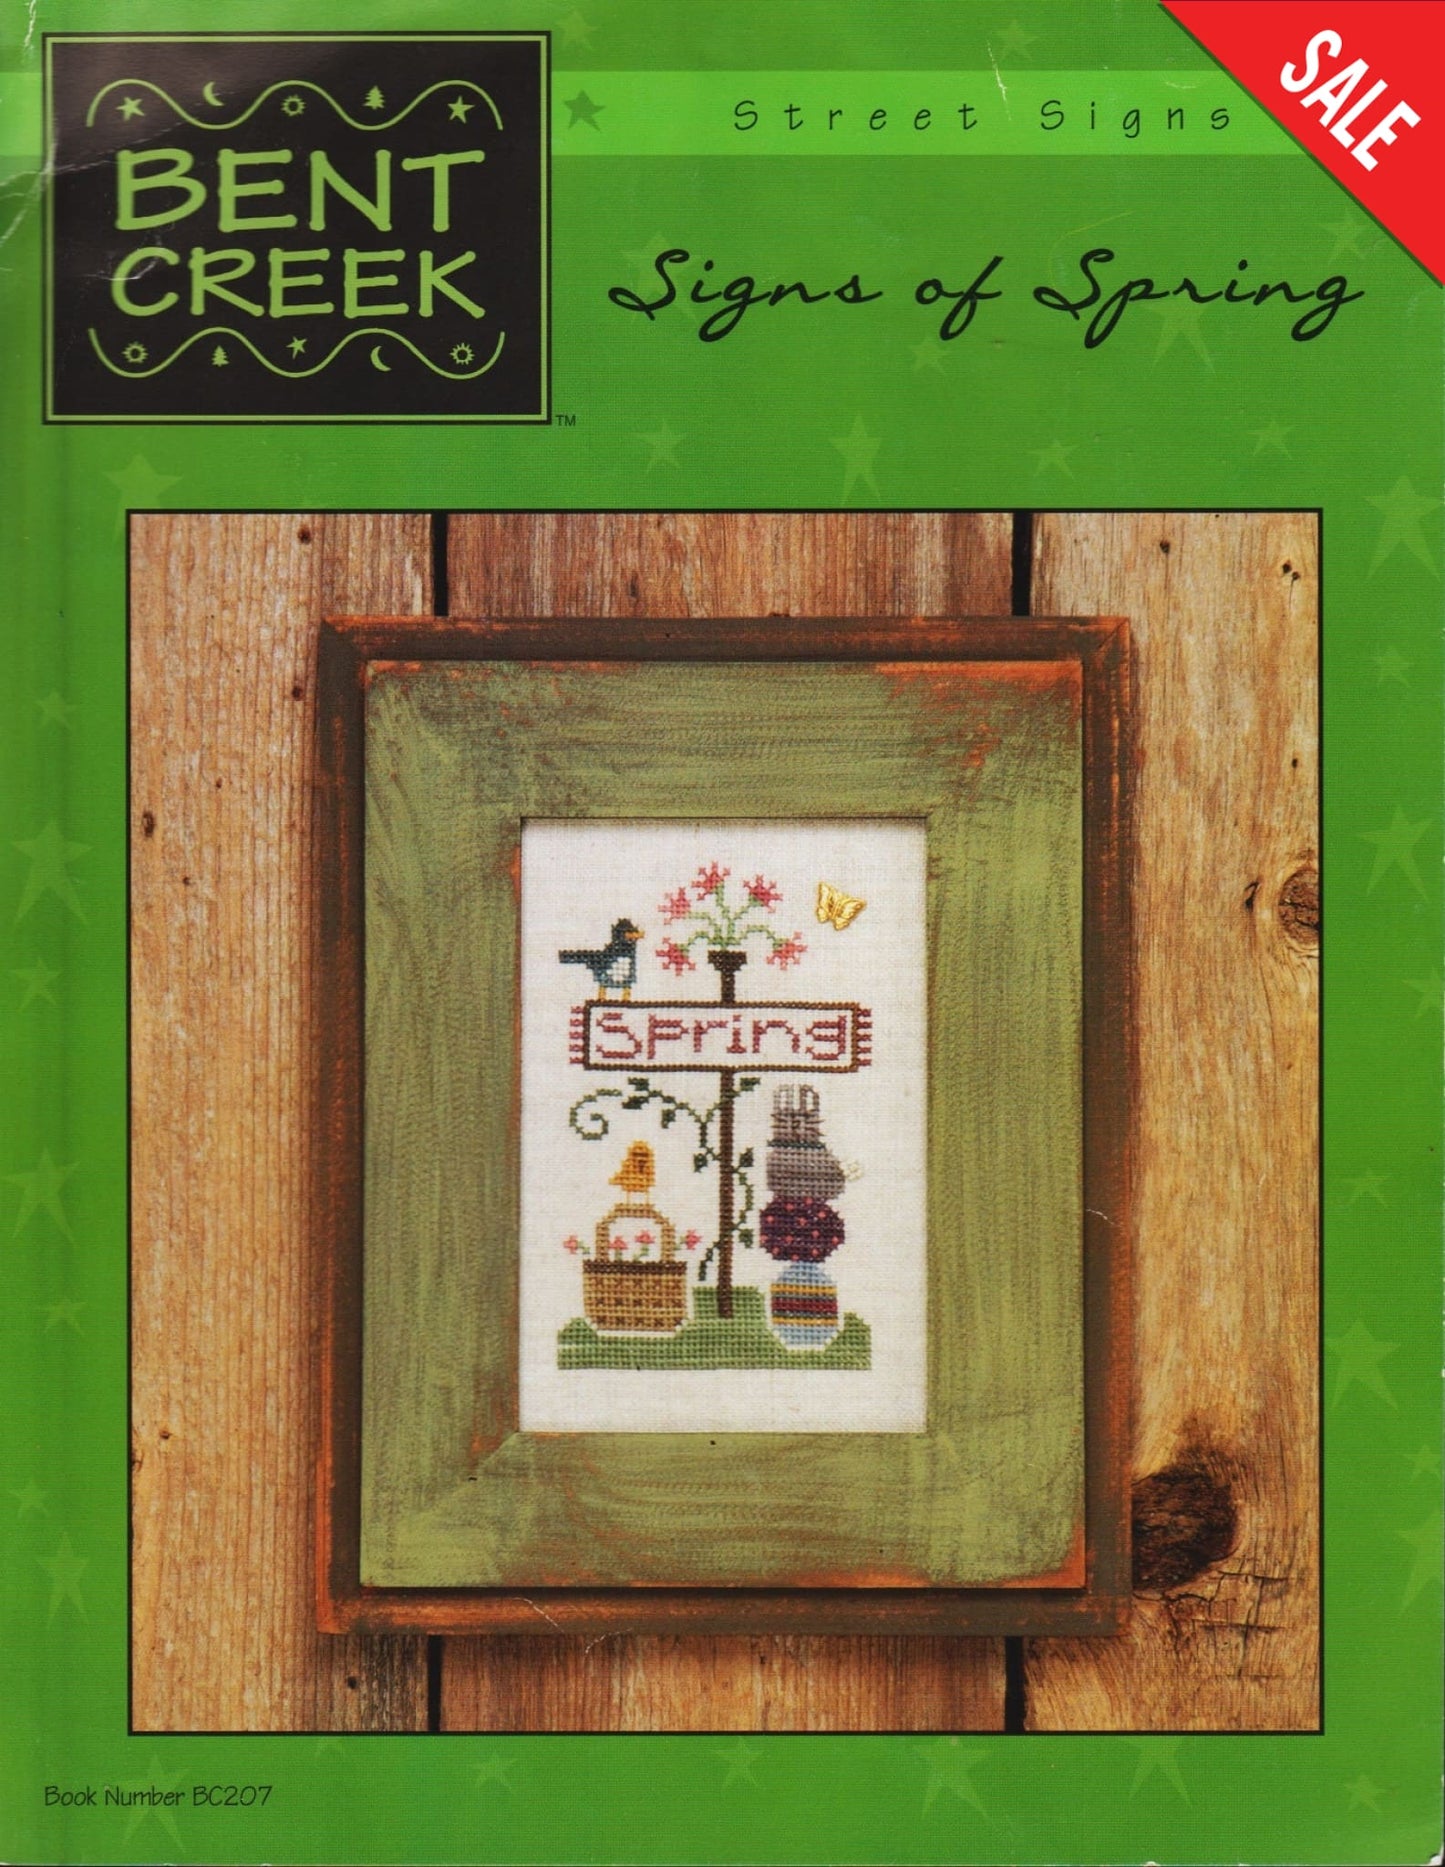 Bent Creek Signs Of Spring BC207 cross stitch pattern